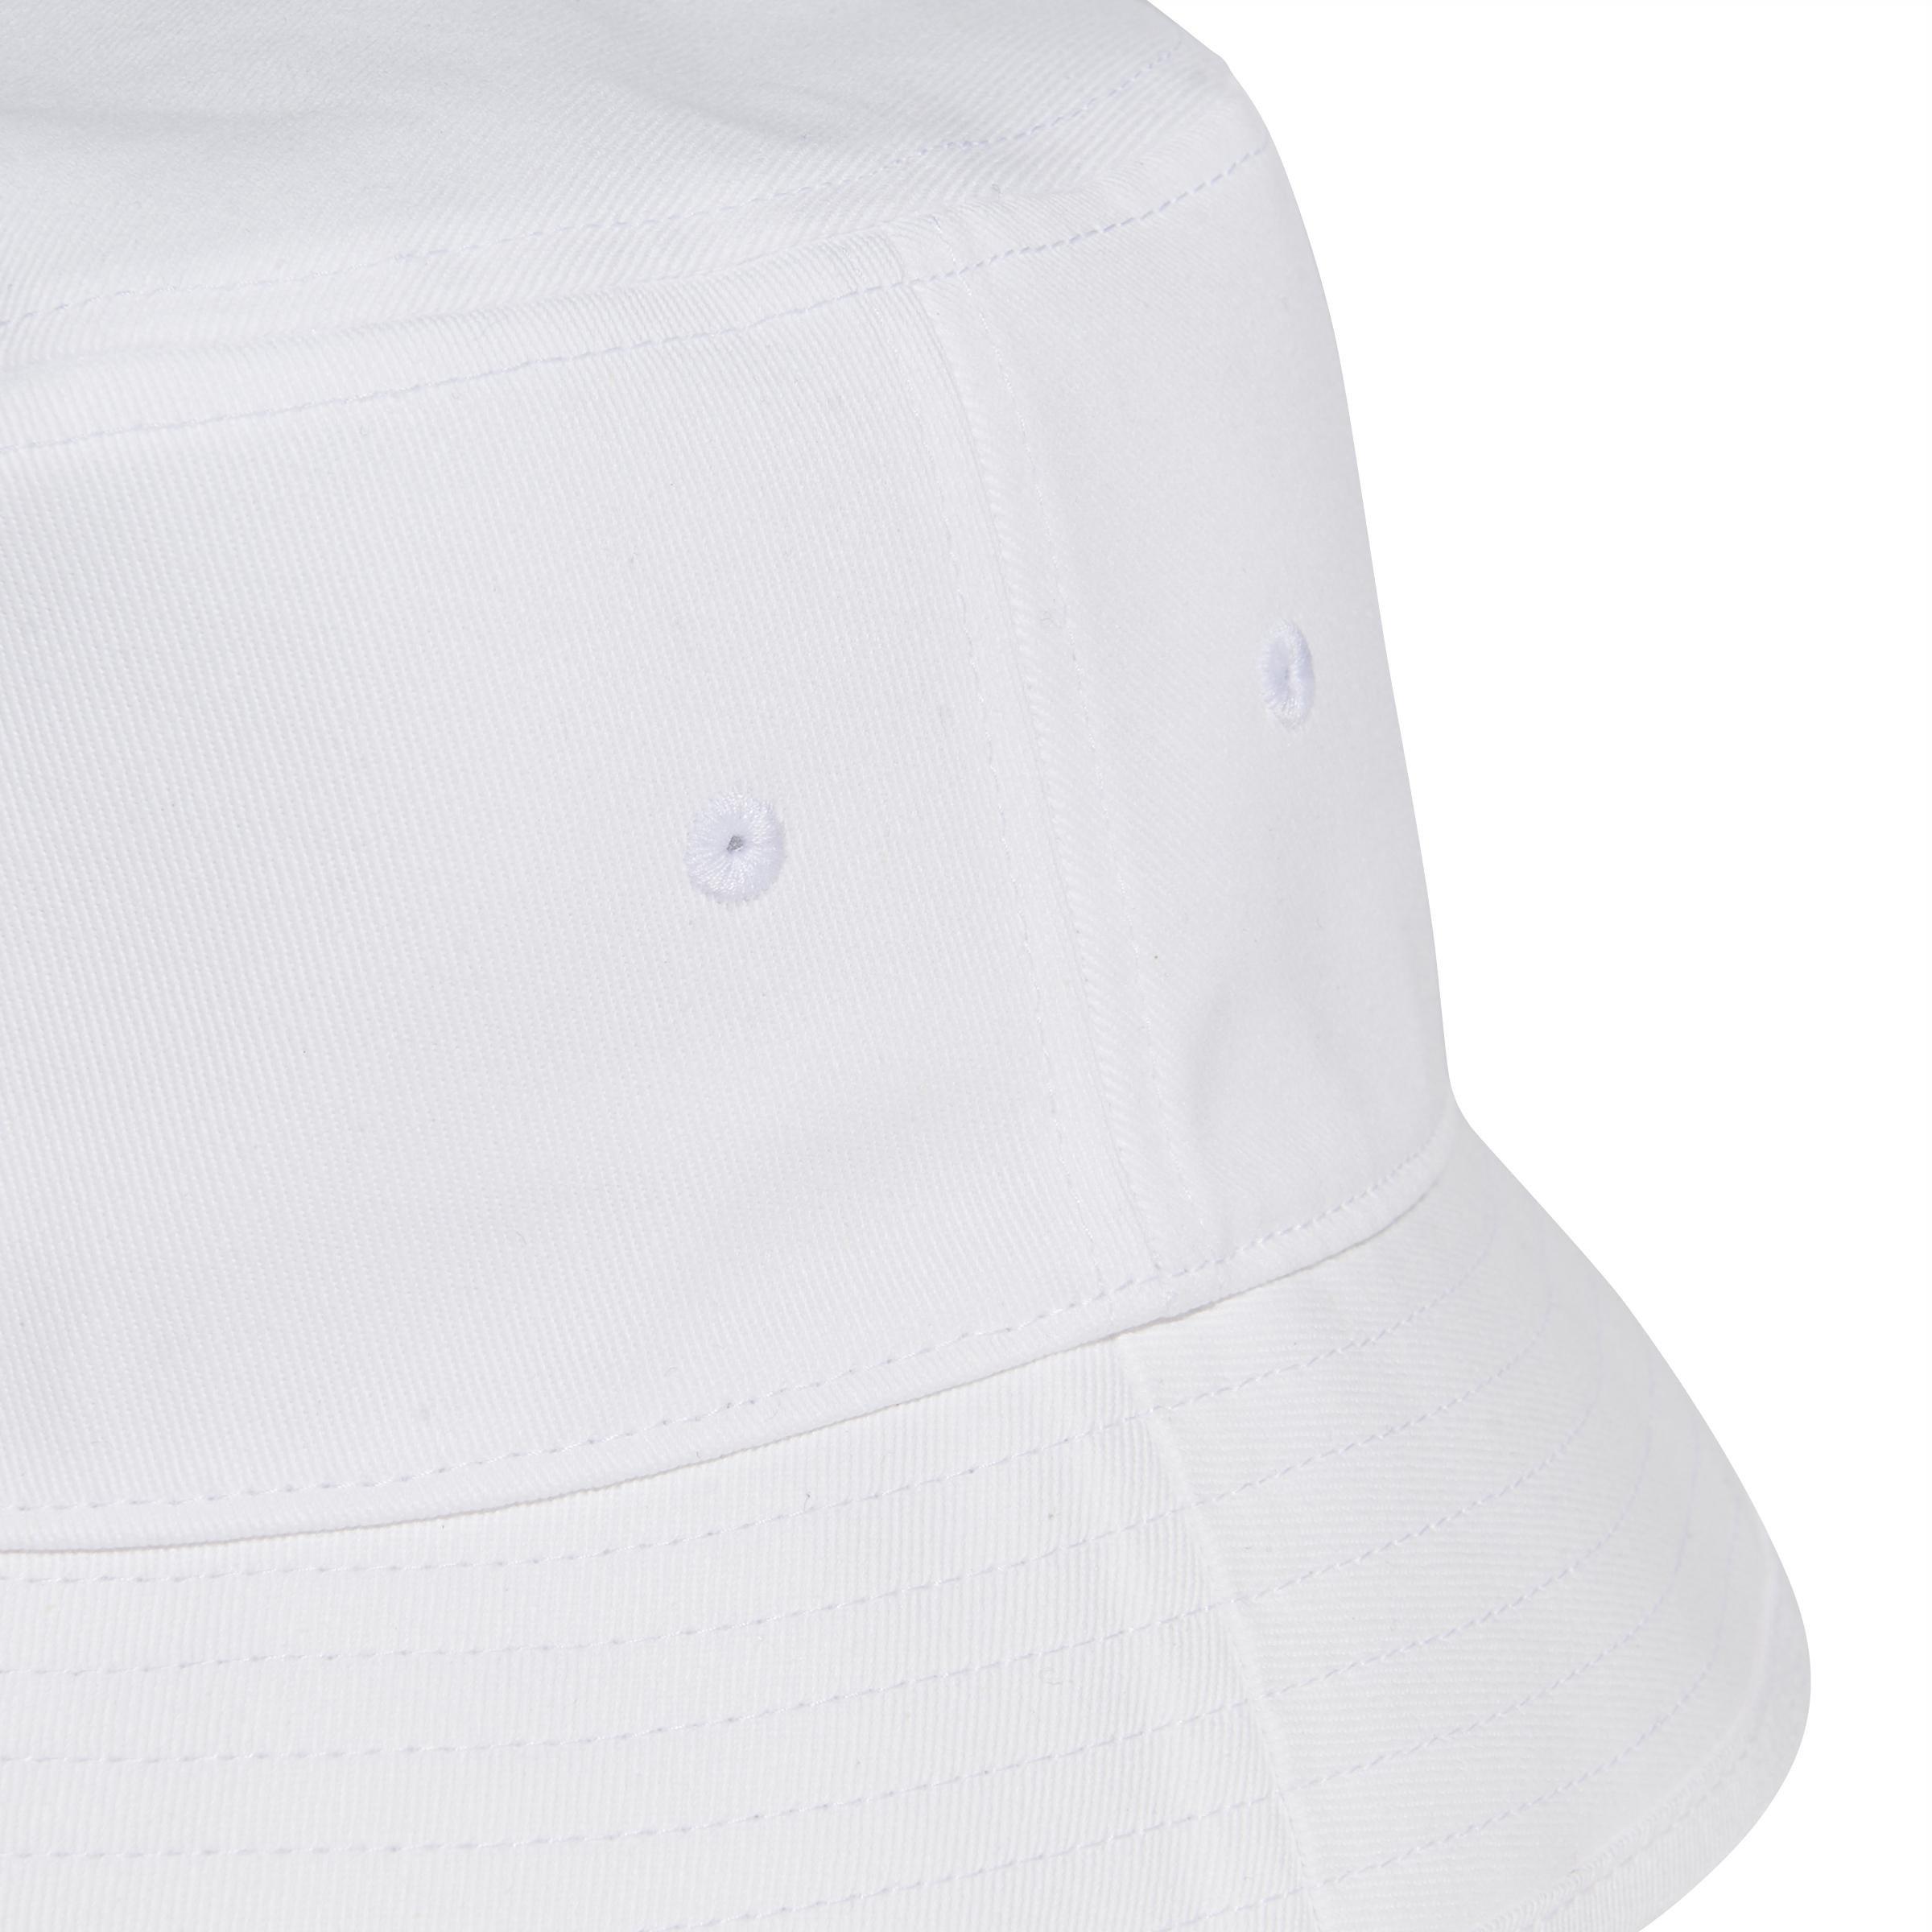 adidas - Unisex Trefoil Bucket Hat, White